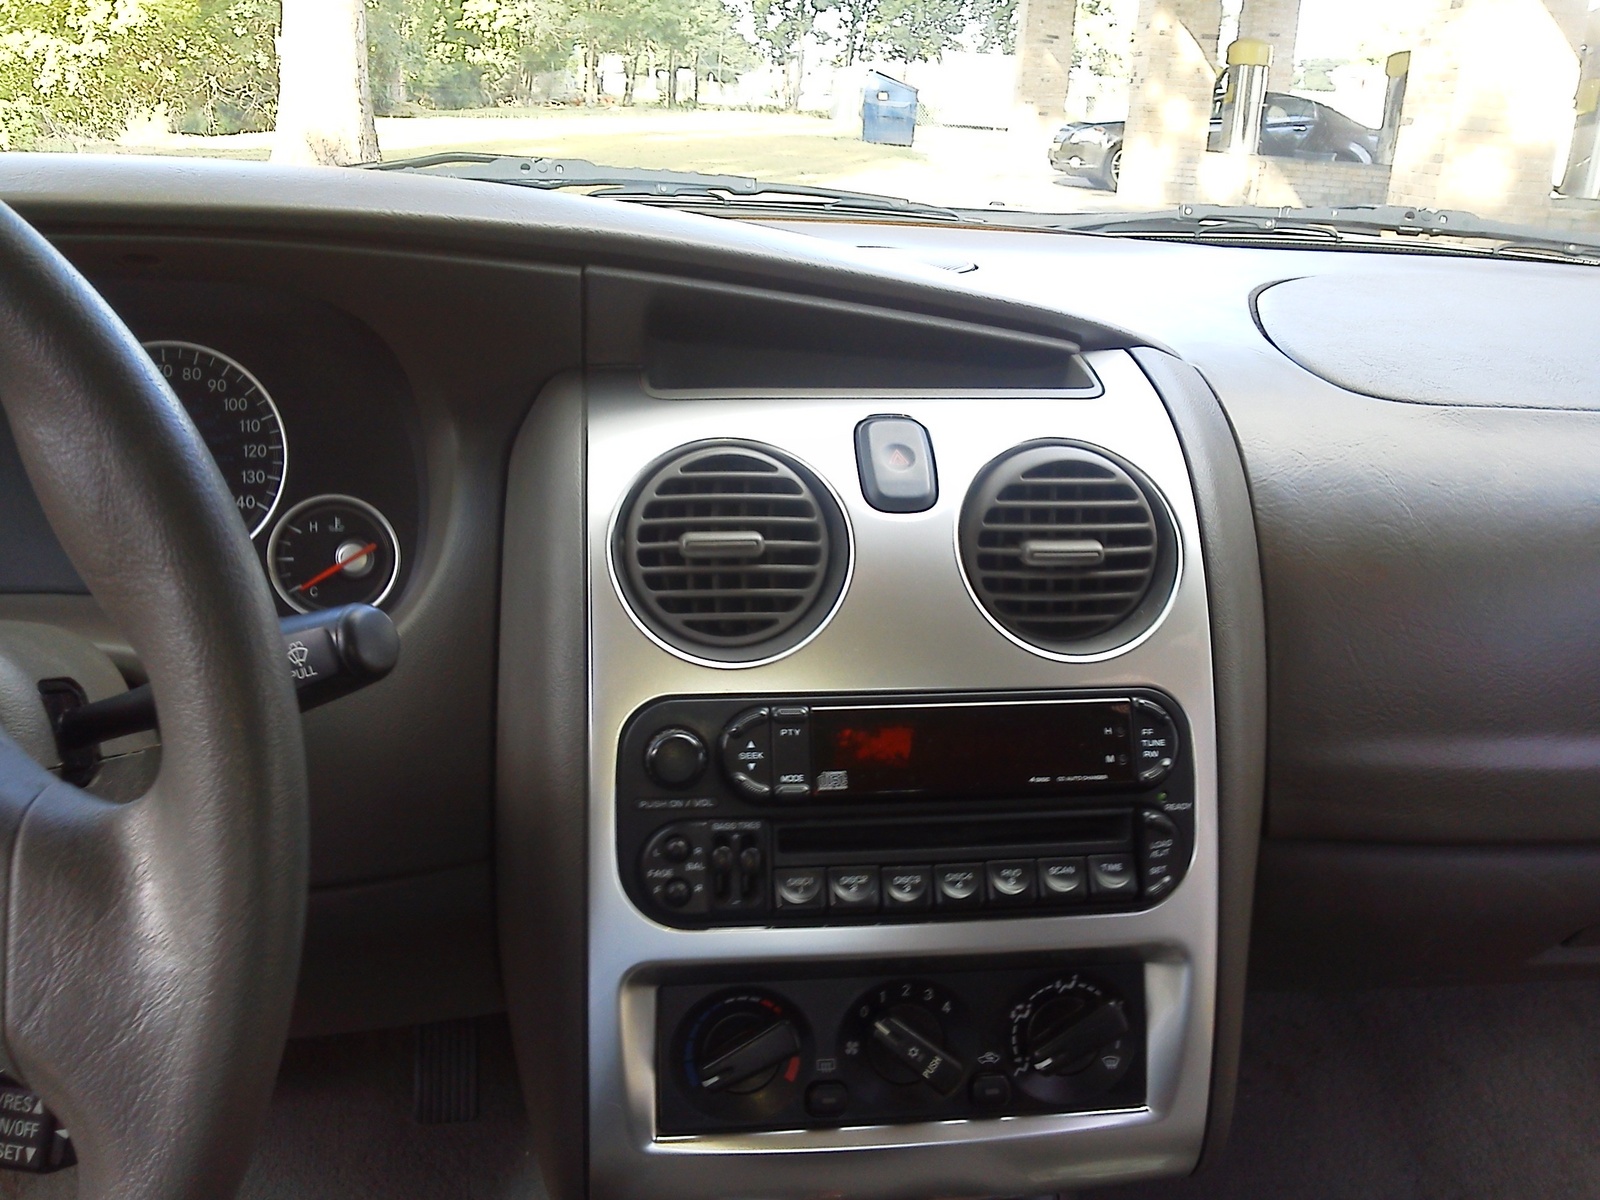 2001 Chrysler sebring convertible interior door handle #2